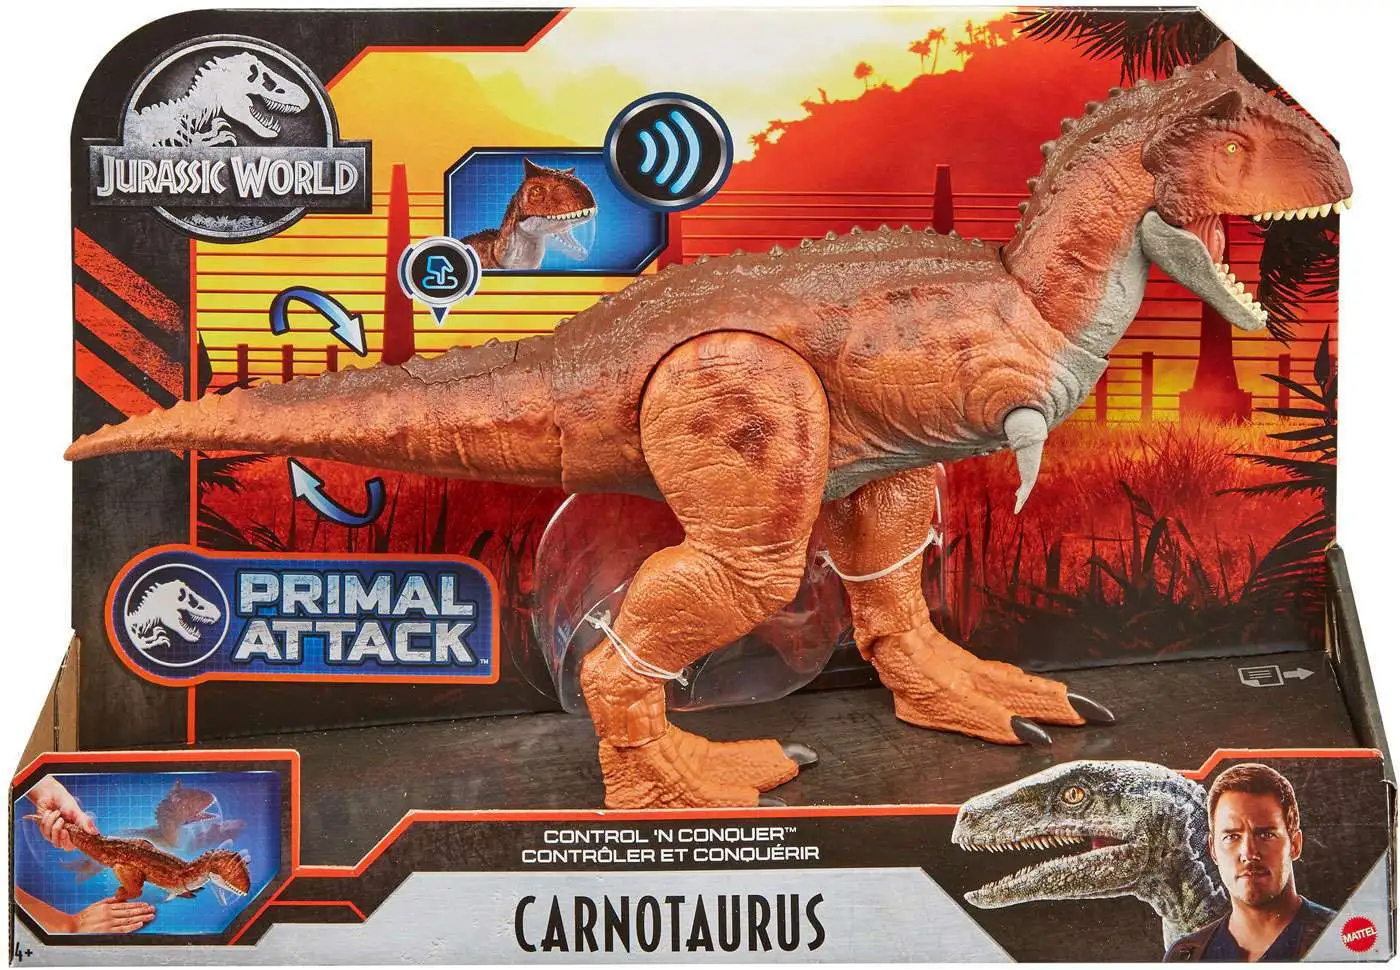 Mattel Jurassic World Primal Attack Carnotaurus Toro Action Figure 15" New 2020 